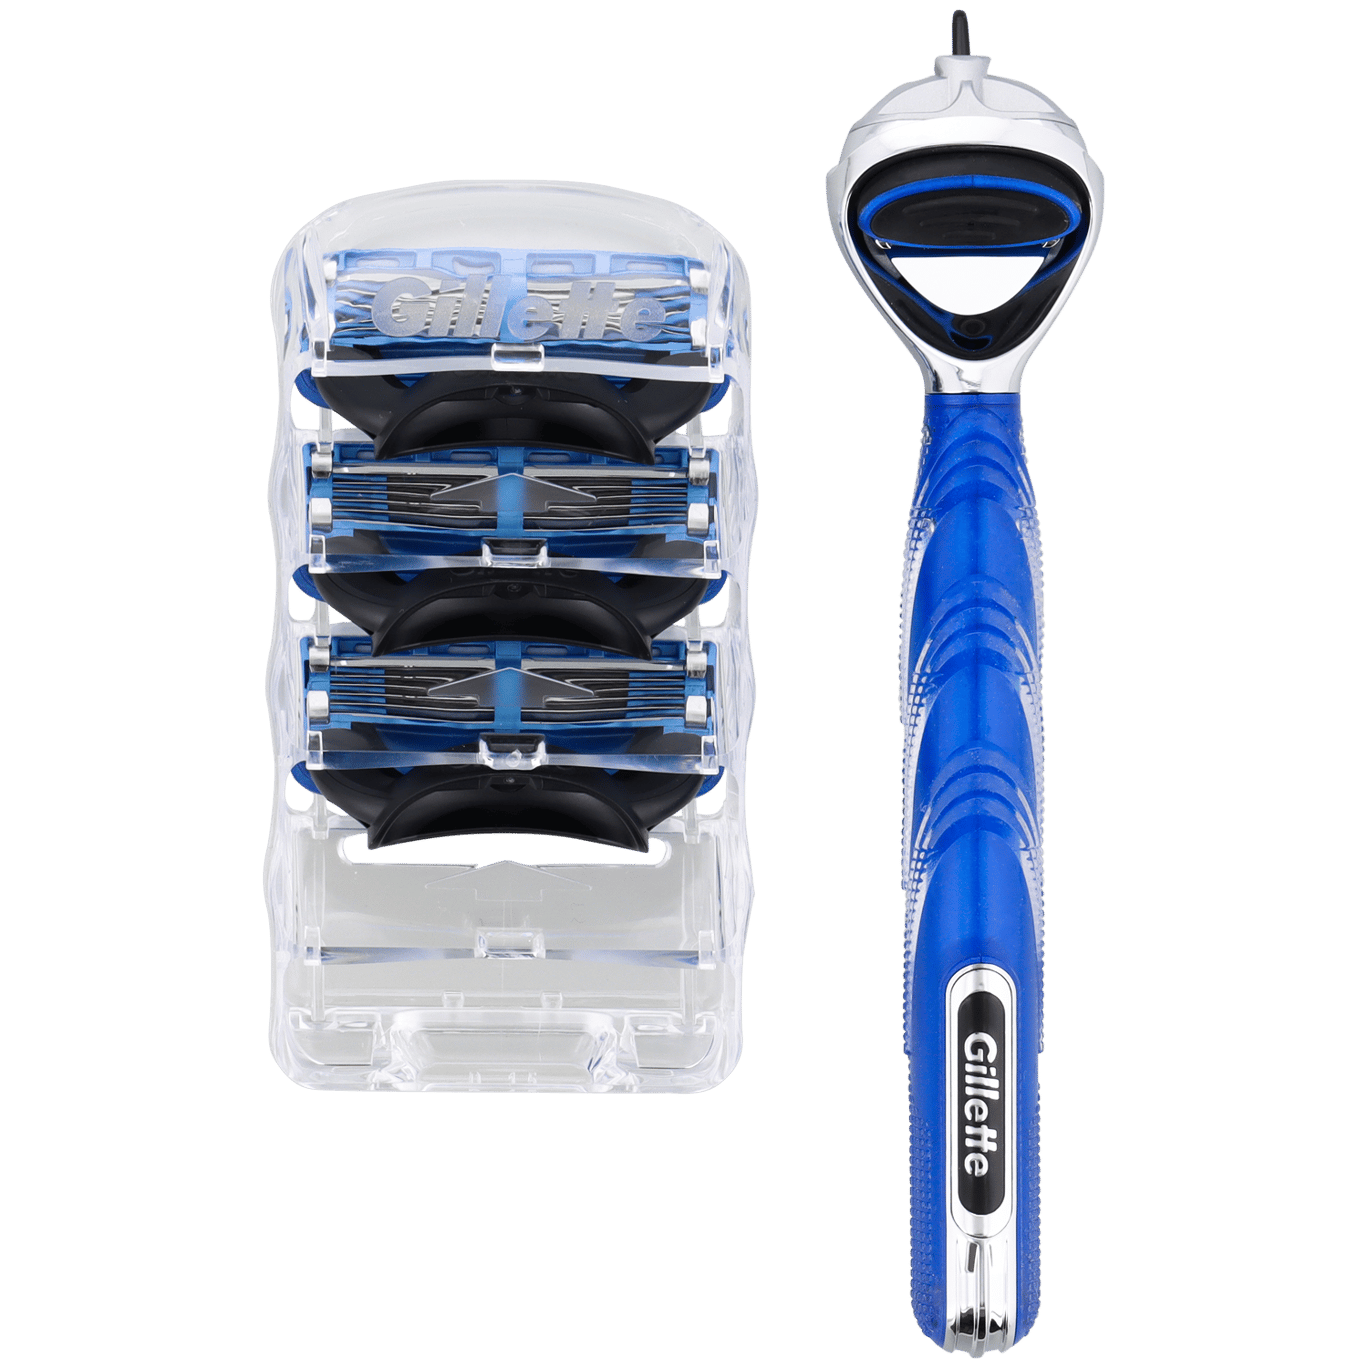 Lâminas de barbear Gillette Fusion5 Sport